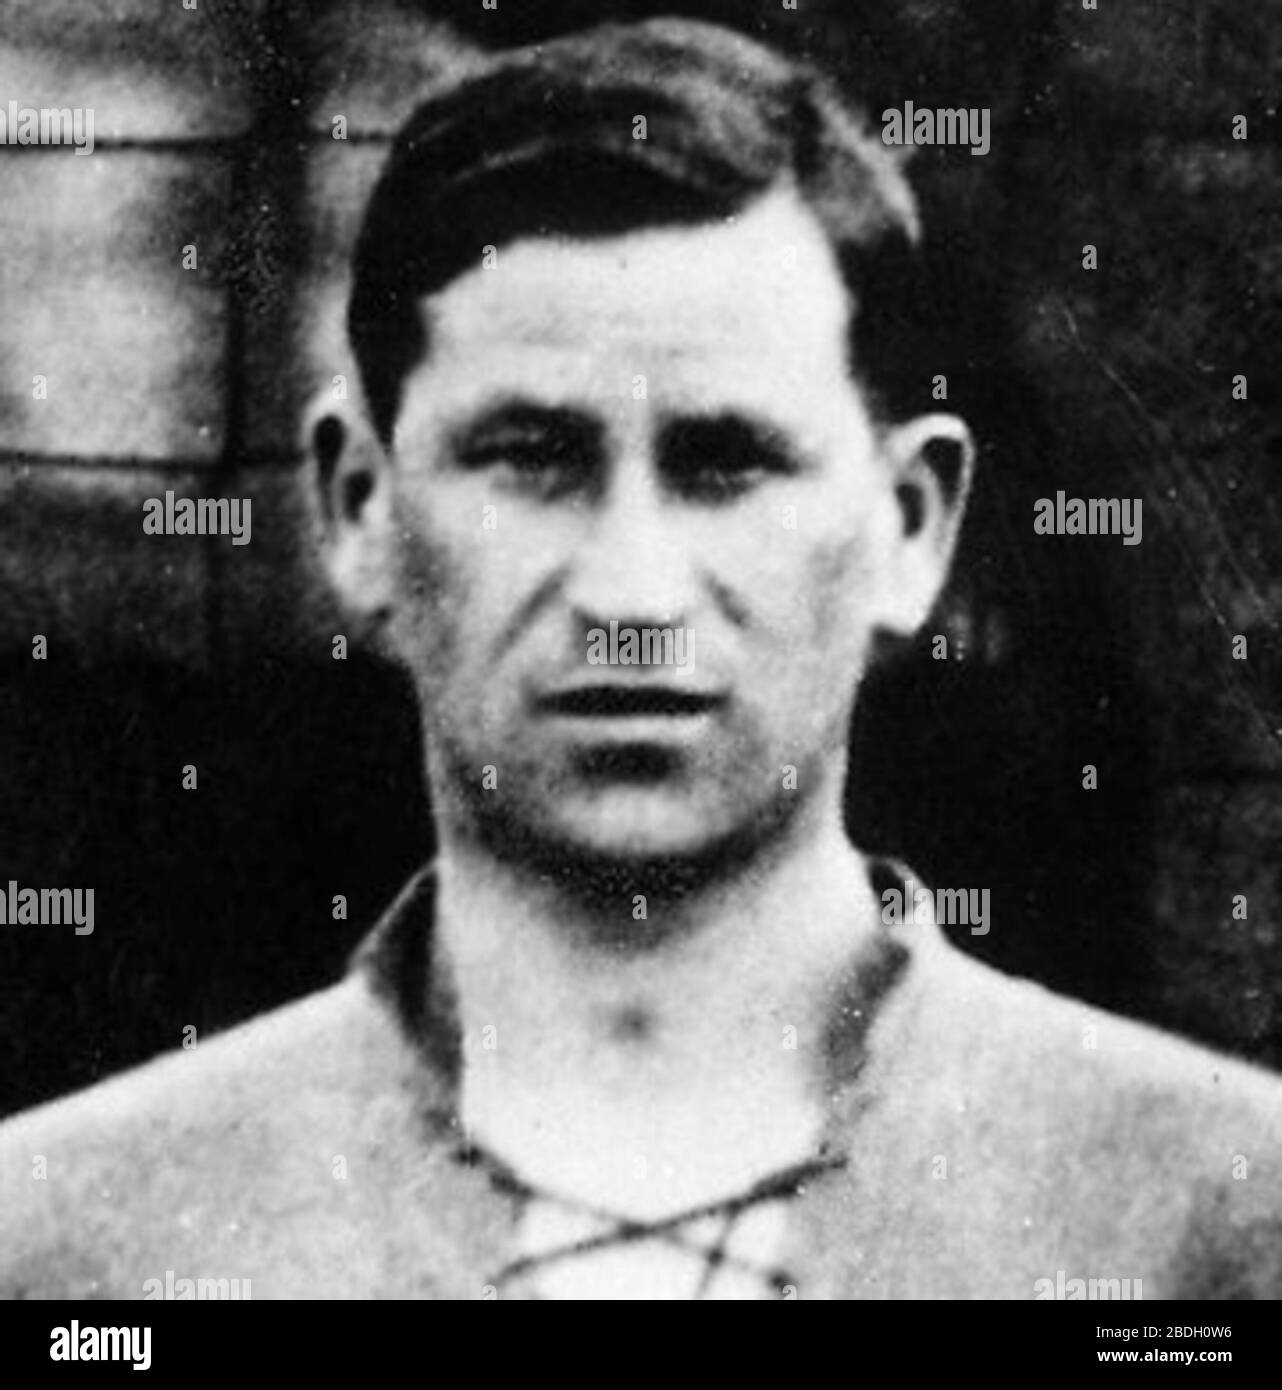 'English: Swedish footballer Gustaf Carlson; 1920s date QS:P,+1920-00-00T00:00:00Z/8; sok.se; Unknown author; ' Stock Photo